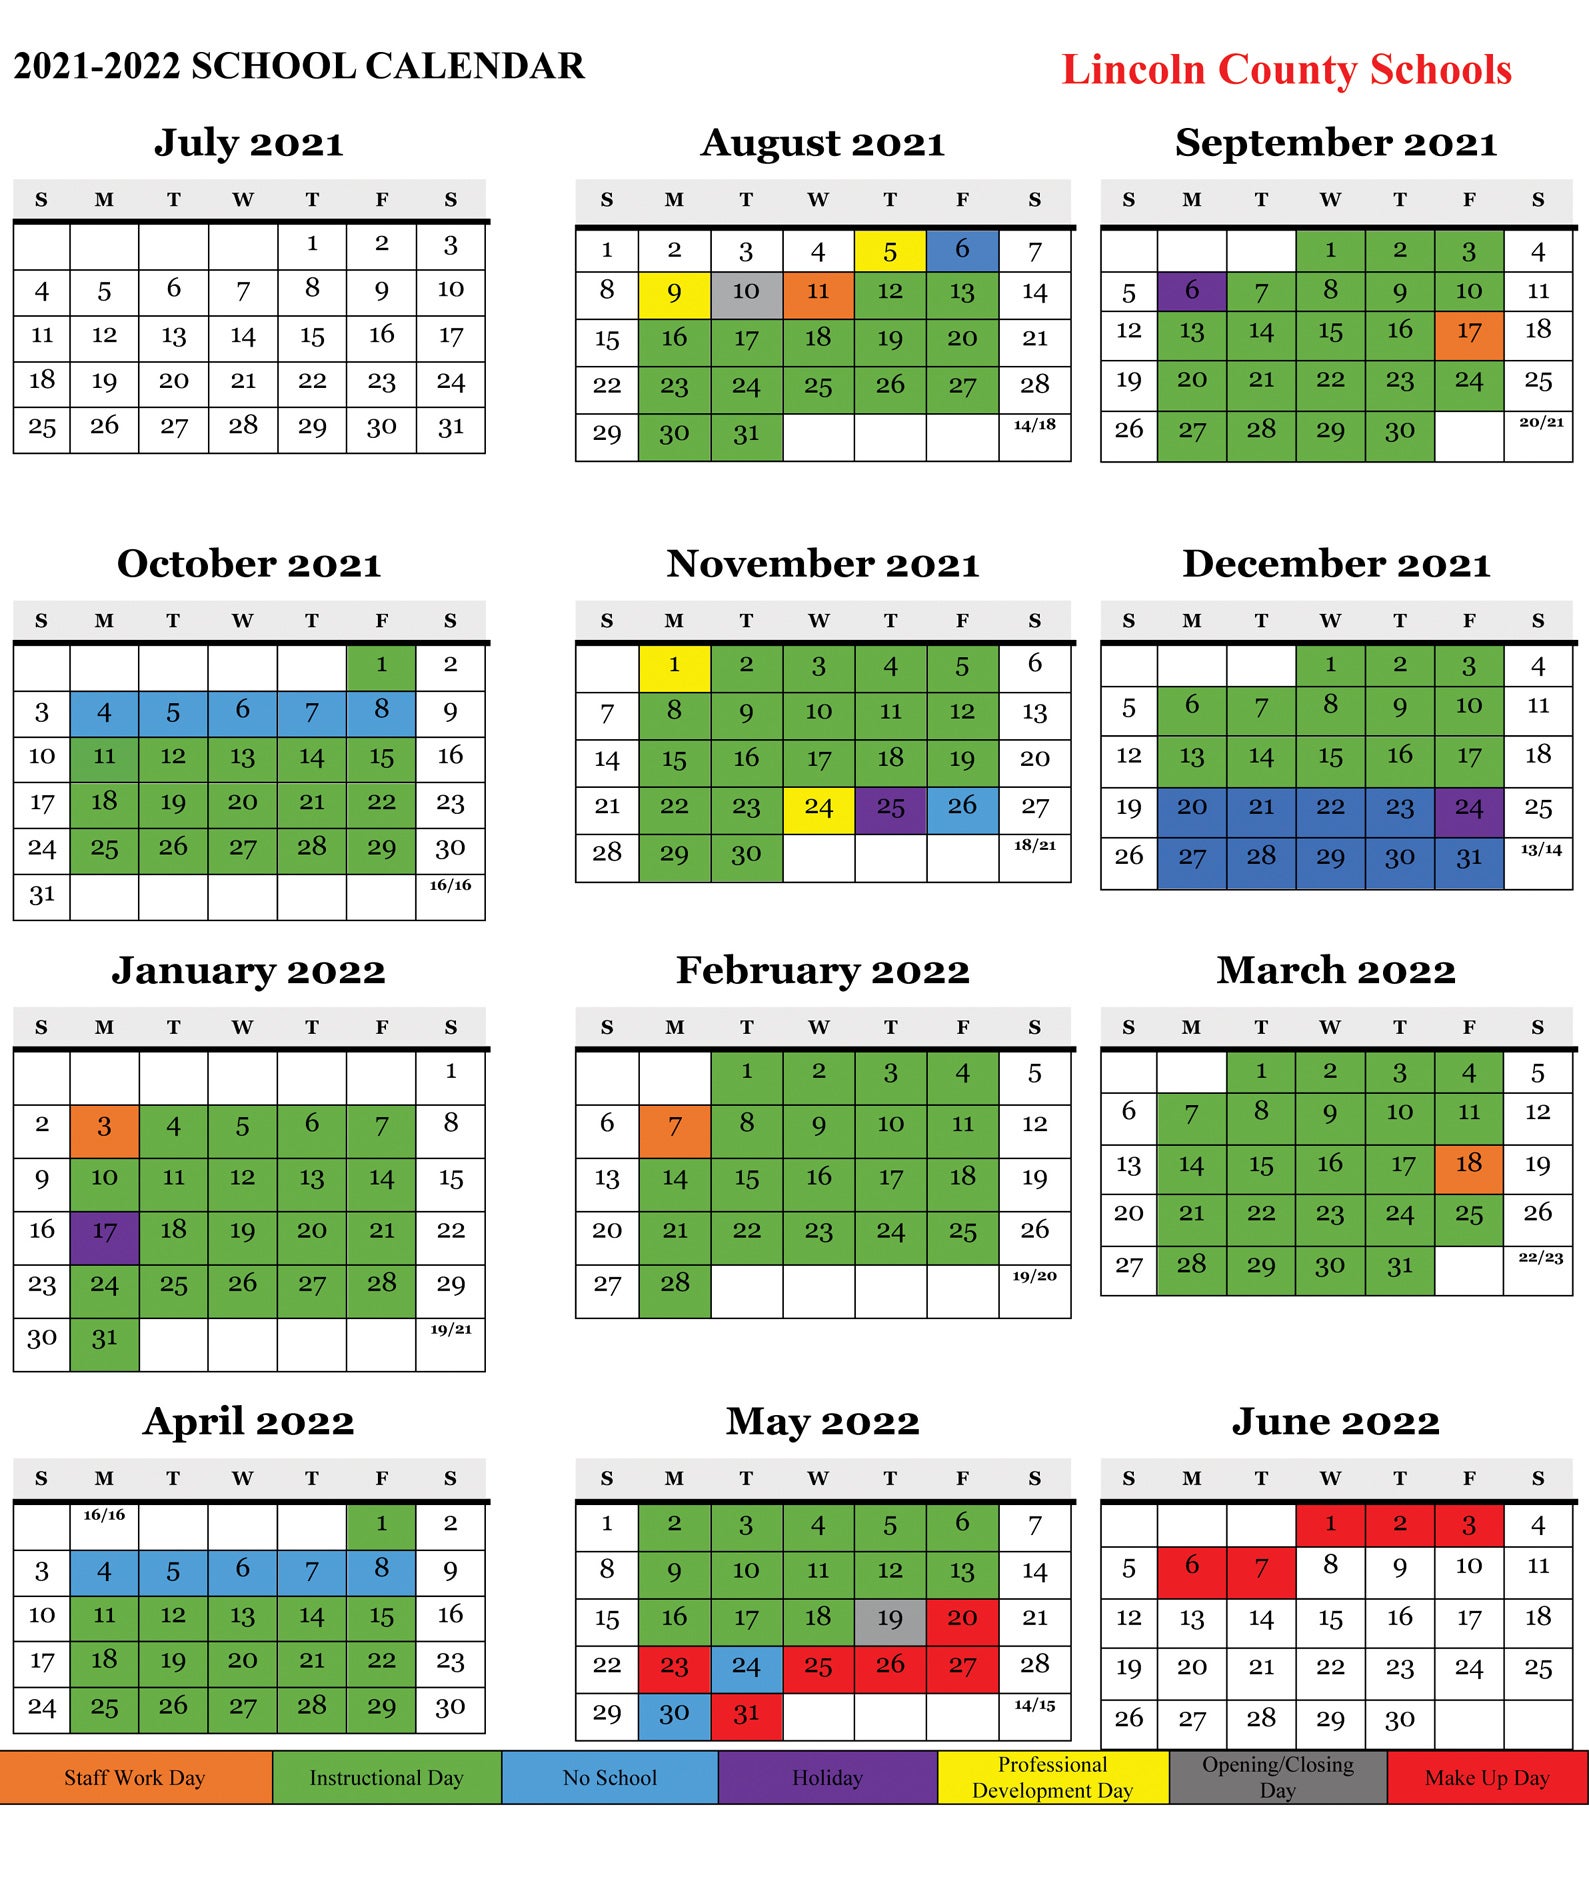 Ndsu Academic Calendar 2022 Board Approves School Year Calendars, Contemplates Rotating Chair Positions  - The Interior Journal | The Interior Journal